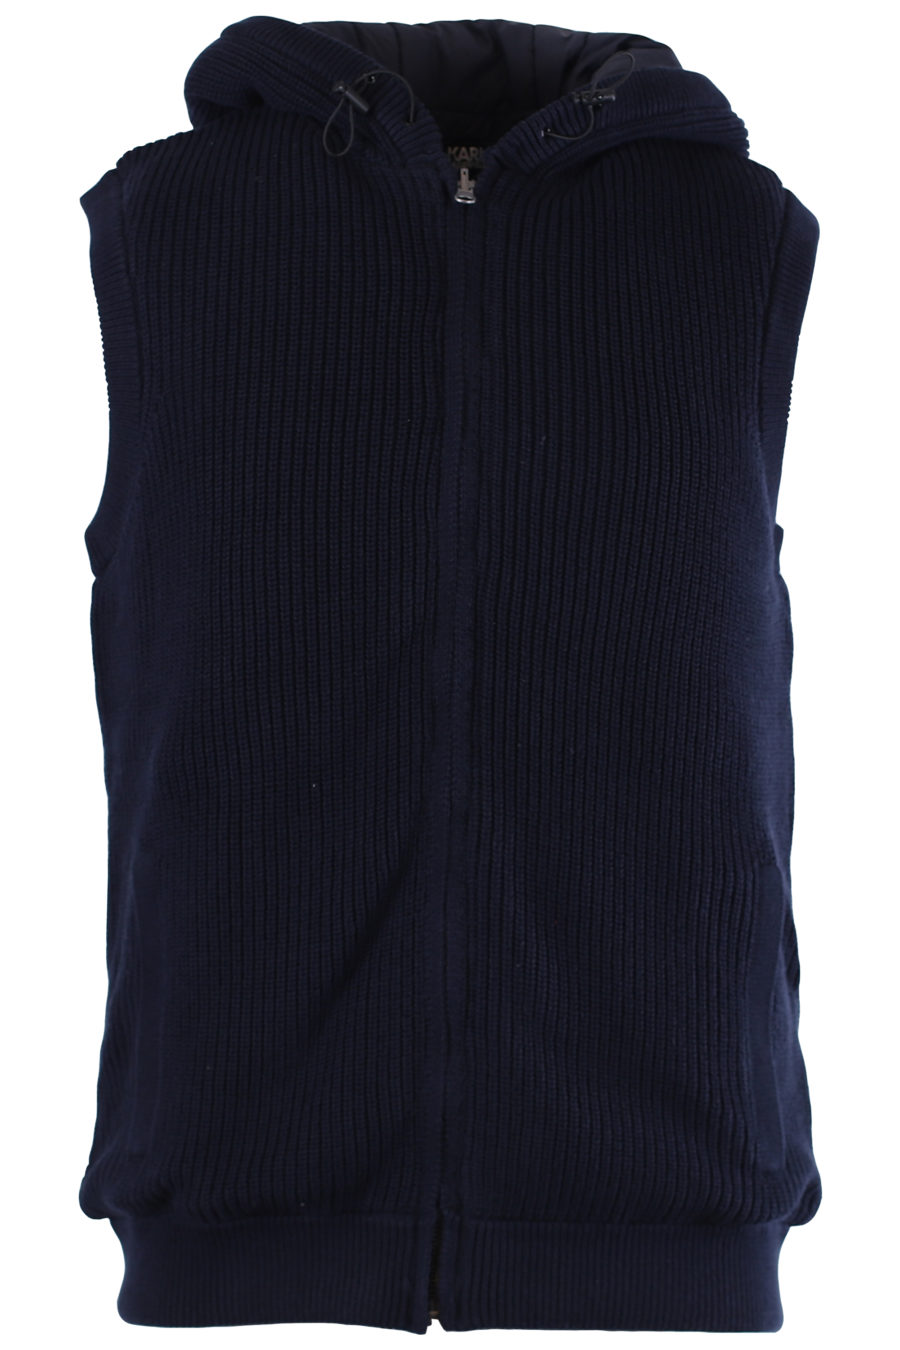 Reversible dark blue knitted waistcoat - IMG 0542